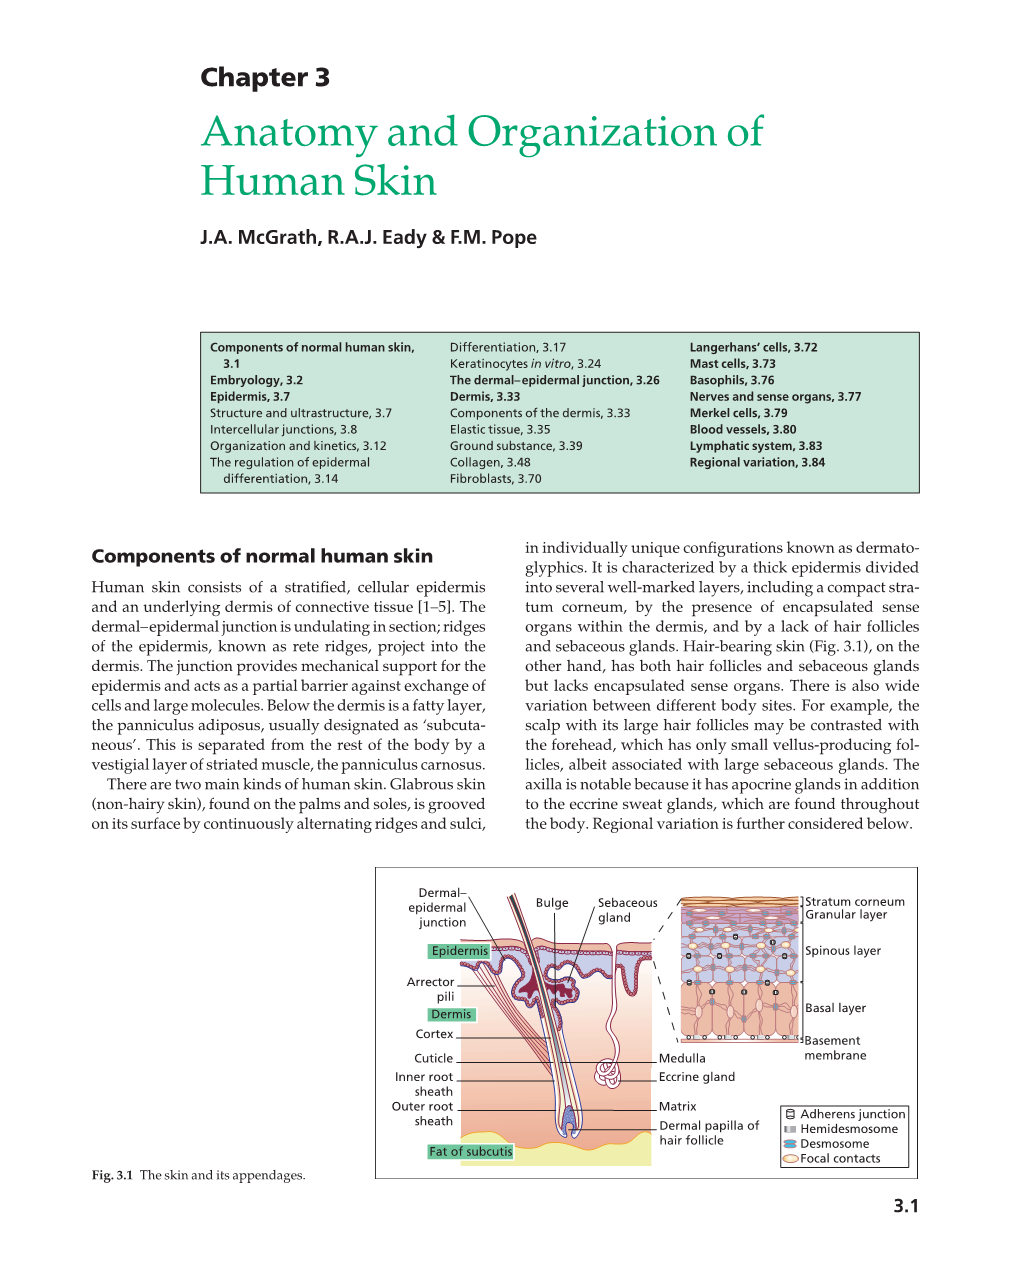 Anatomy and Organization of Human Skin